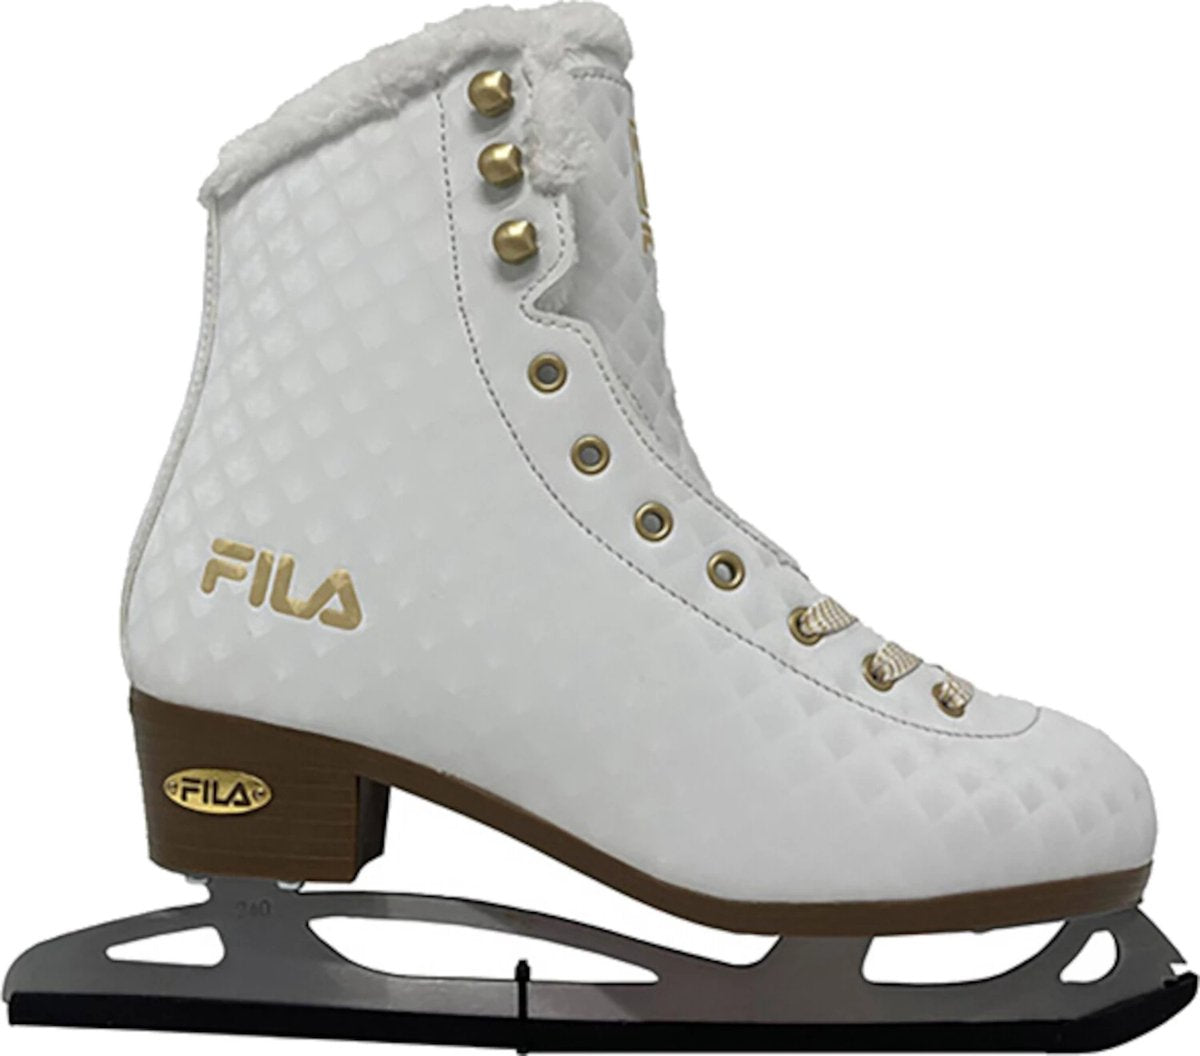 Furr Ice Fila Figure Skates